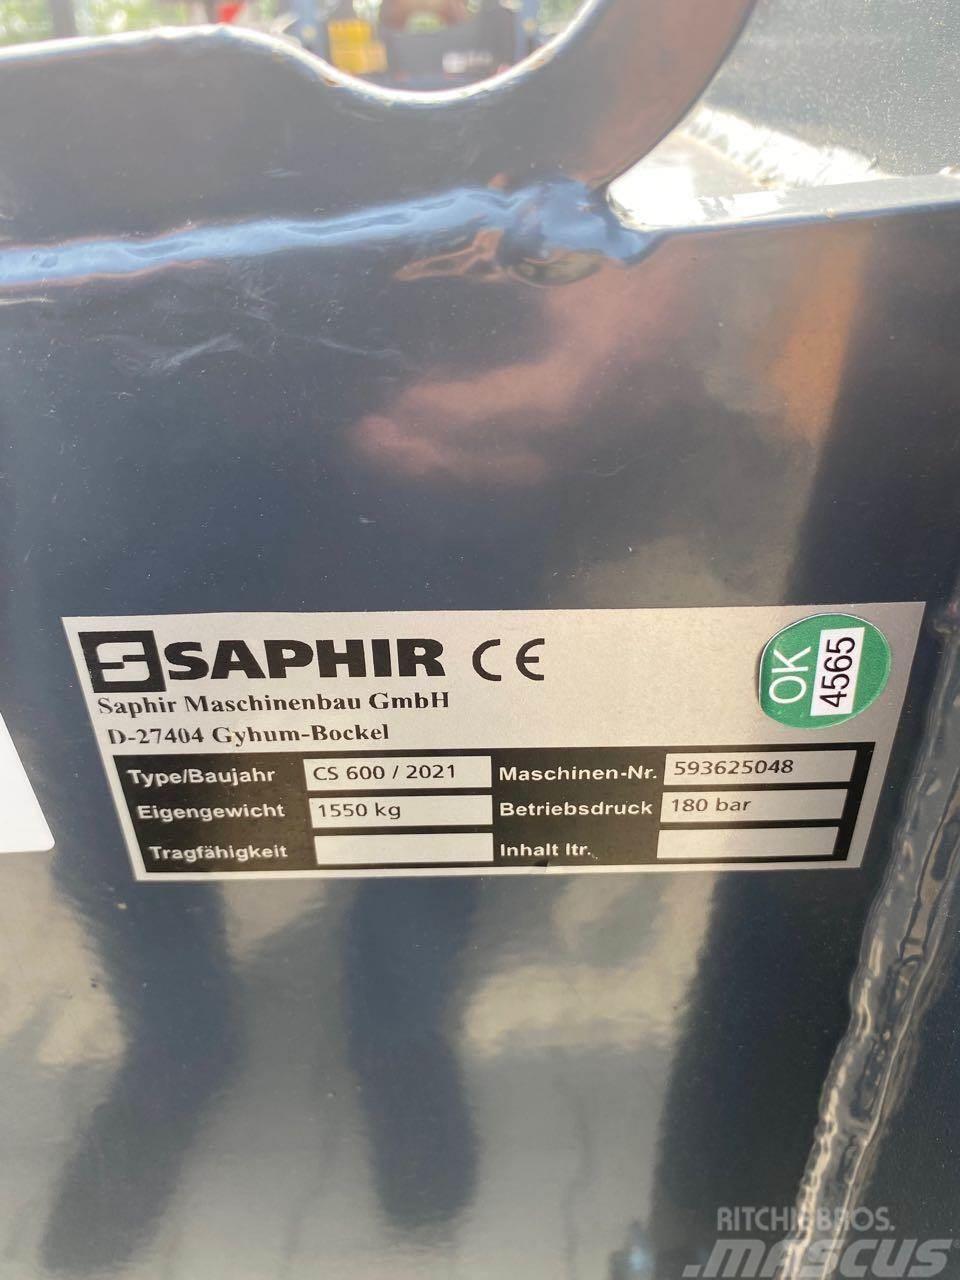 Saphir ClearStar 600 Drugi strojevi i priključci za obradu zemlje